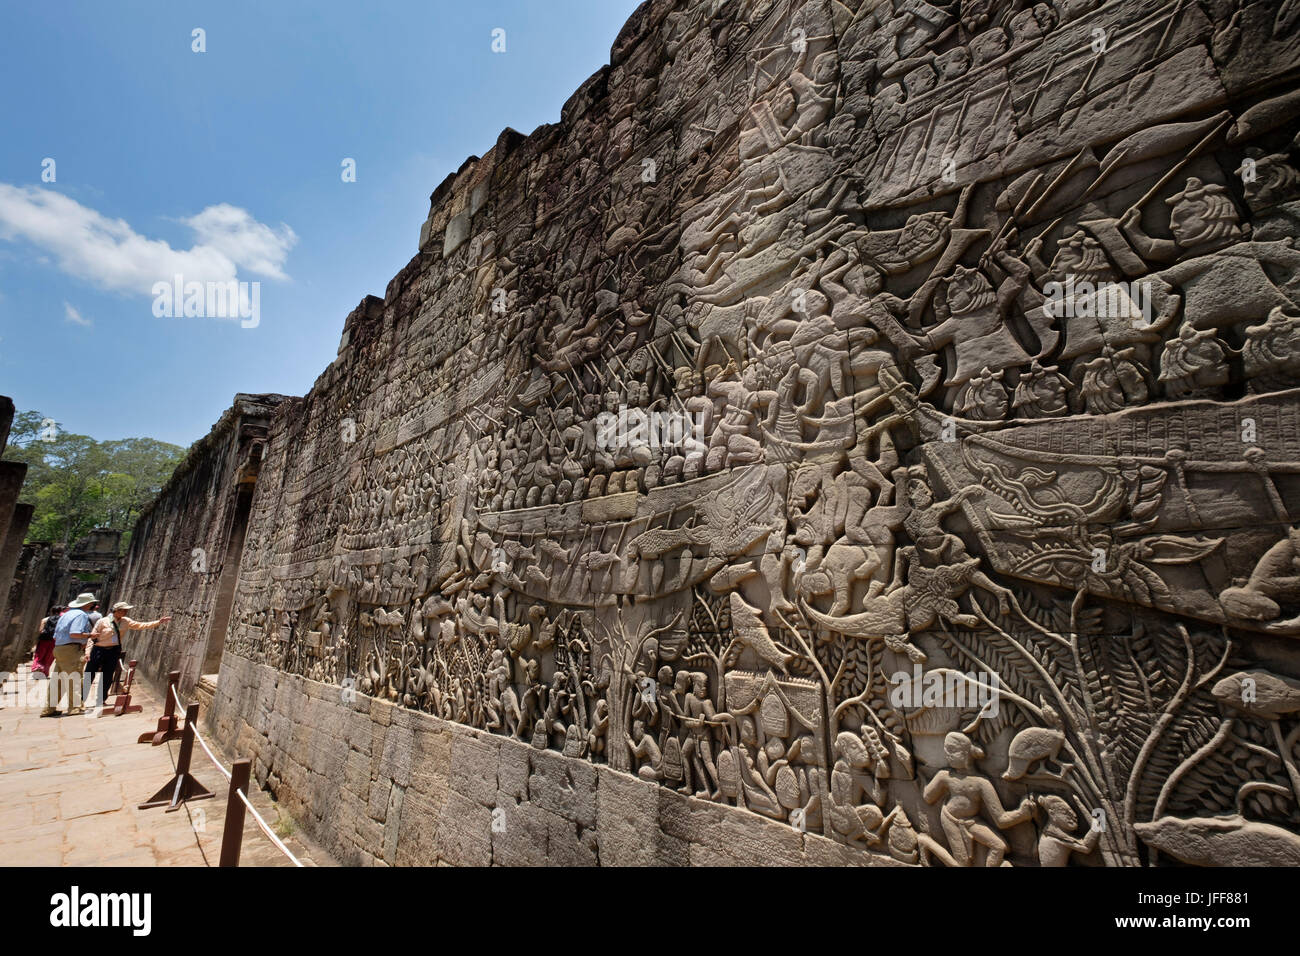 Bas relief sculpture wall at Bayon Temple, Cambodia, Asia Stock Photo